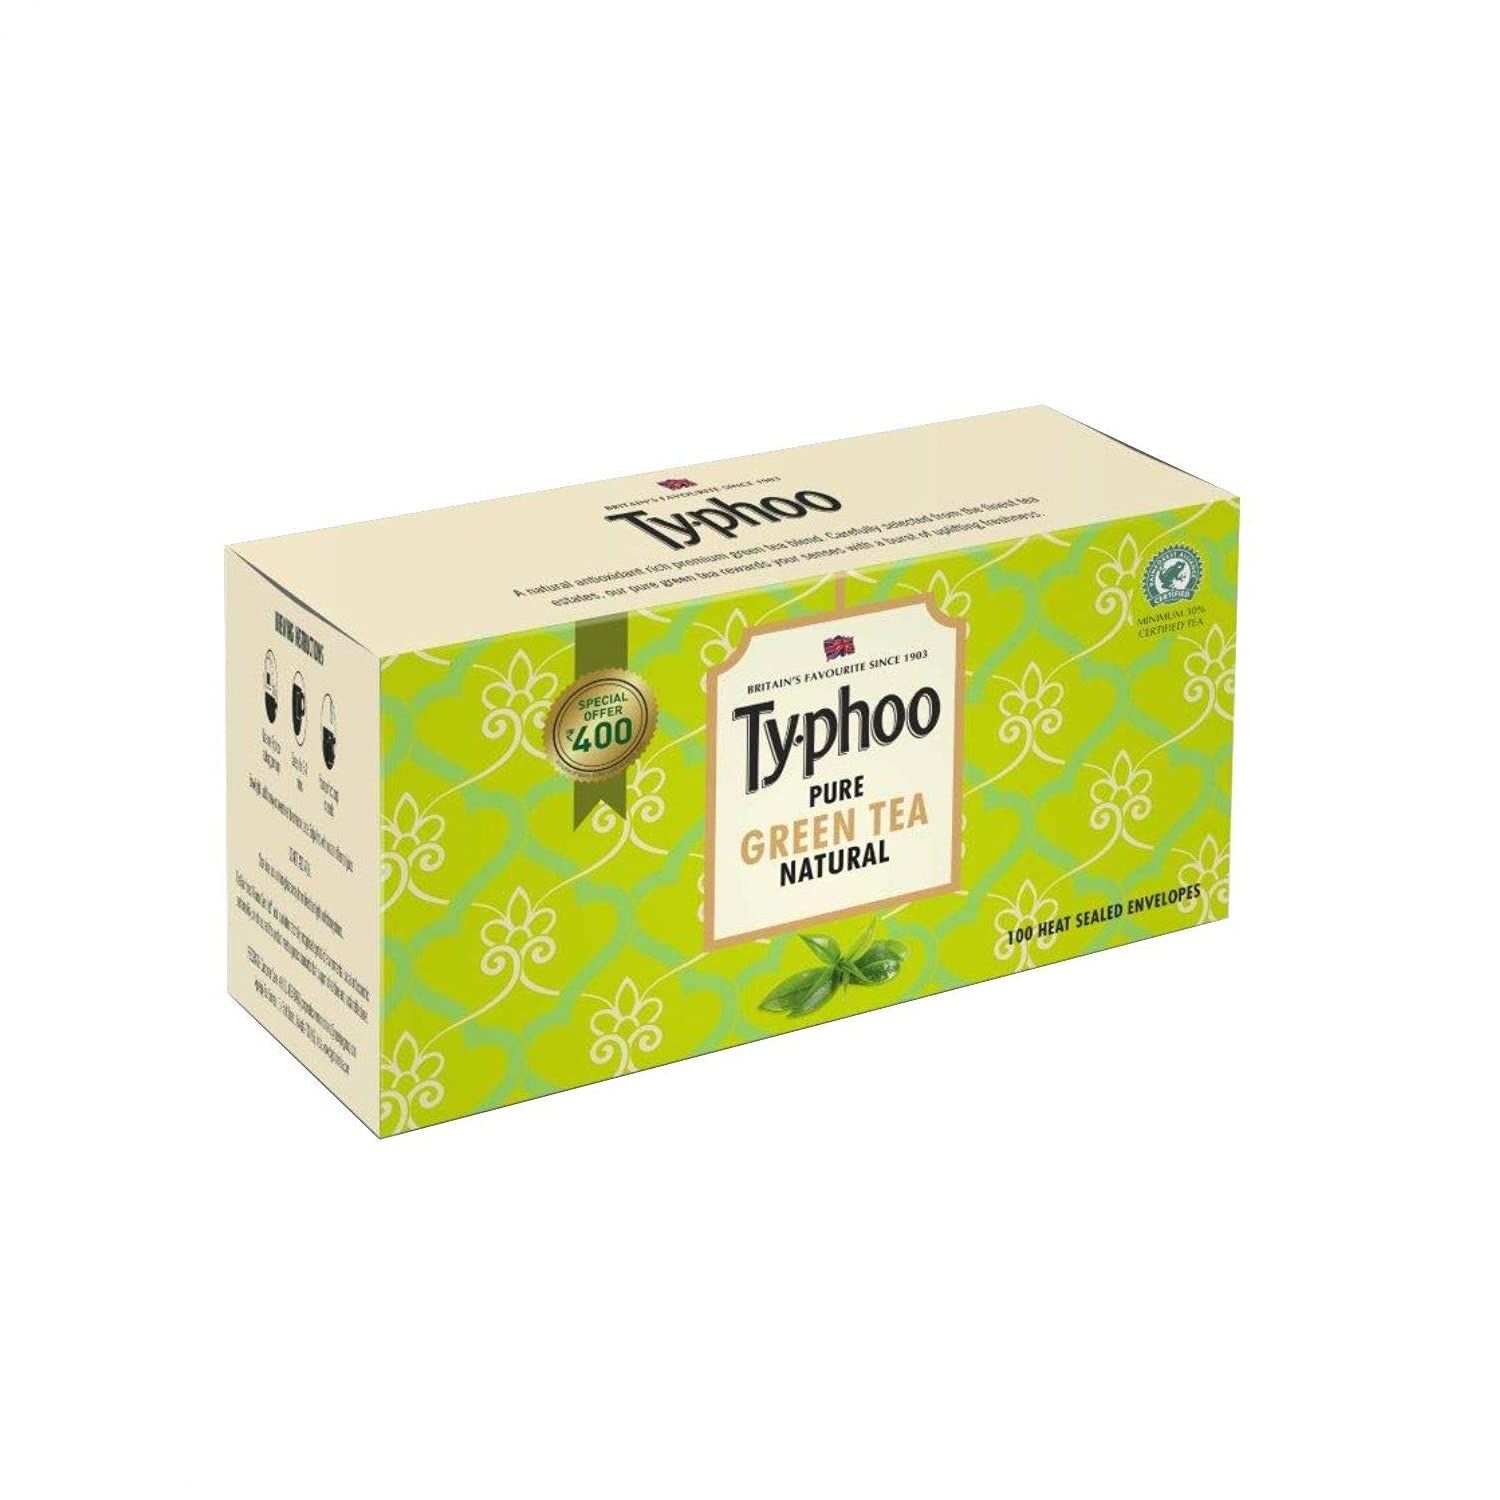 Typhoo Pure Natural Green Tea Bags Image